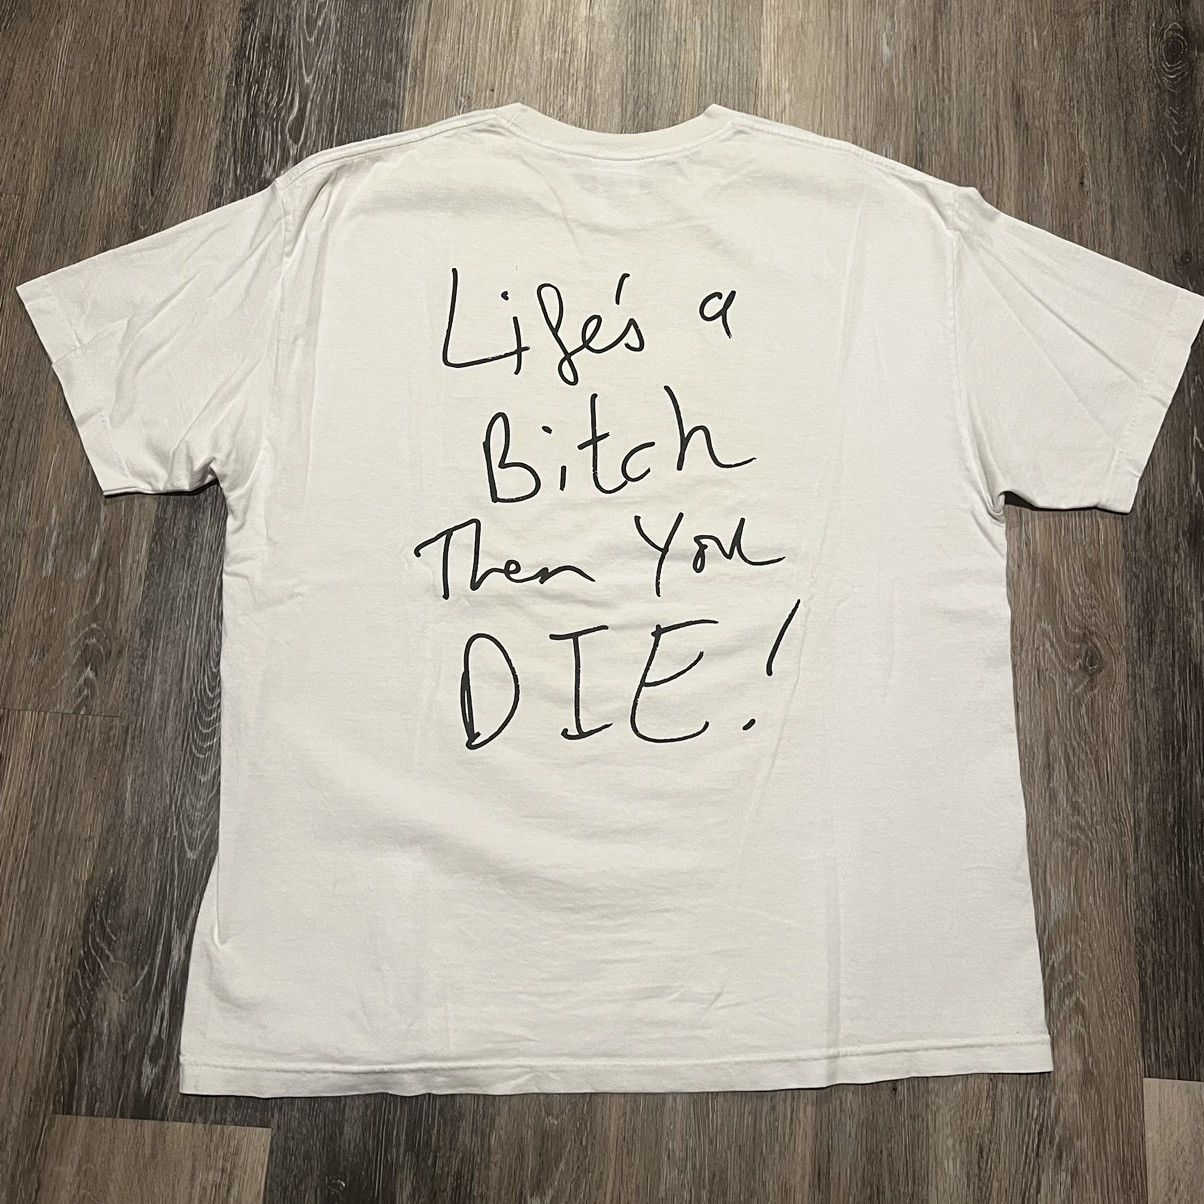 Supreme Supreme Damien Hirst Box Logo Tee life's a bitch t shirt ...